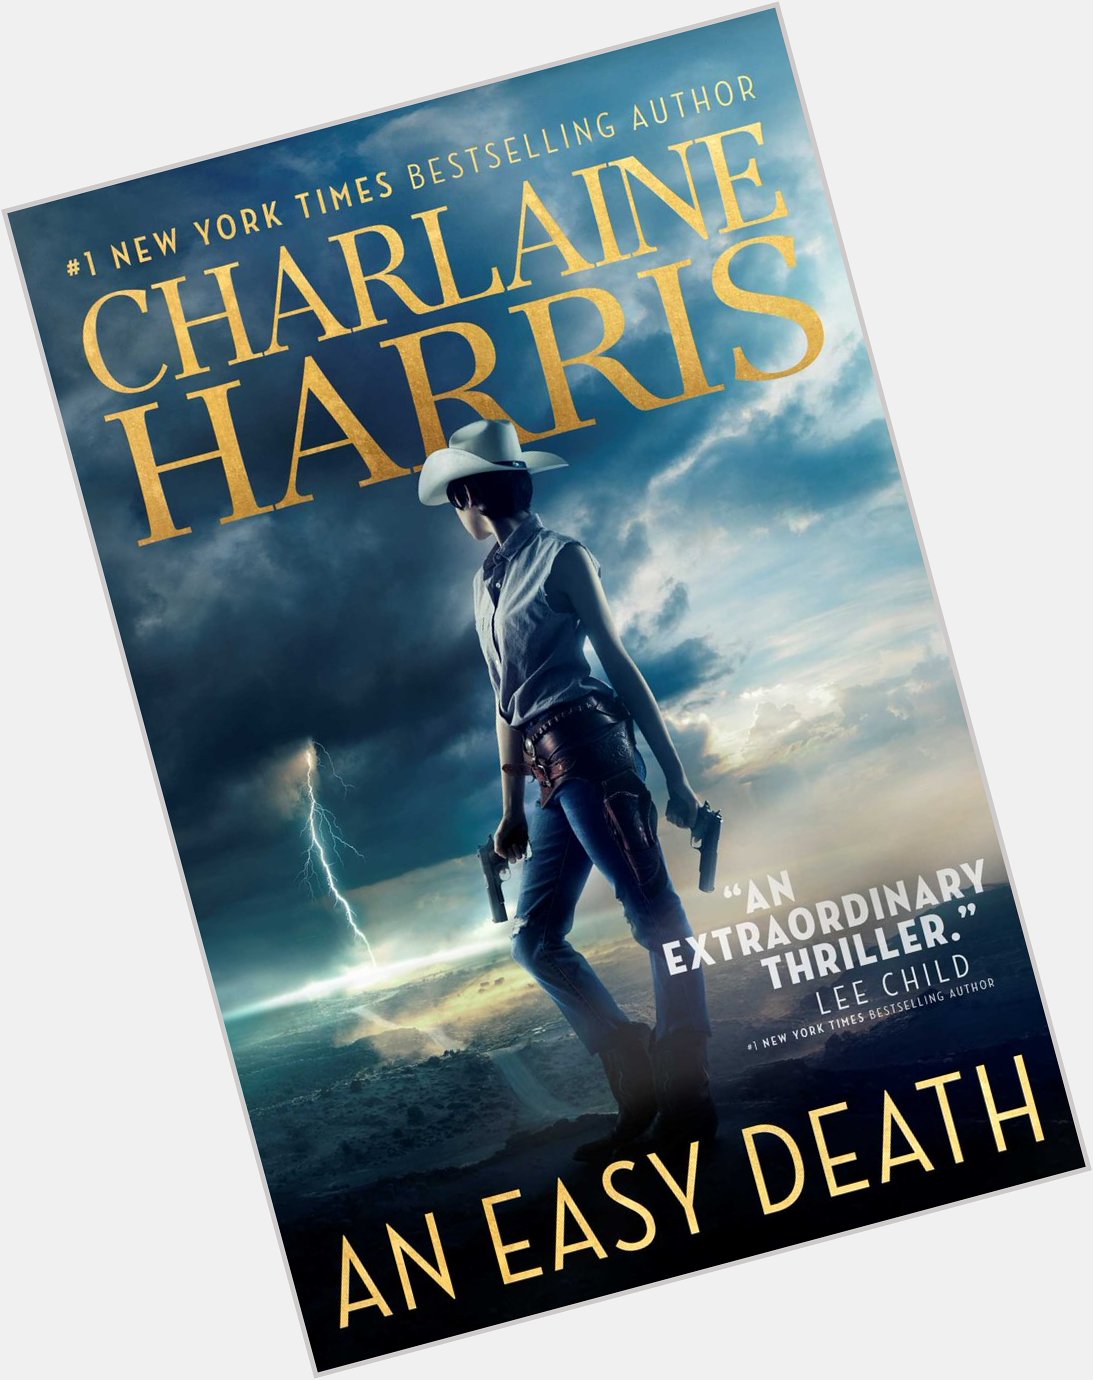 Happy Birthday Charlaine Harris! How did everyone like her newest: An easy death?  